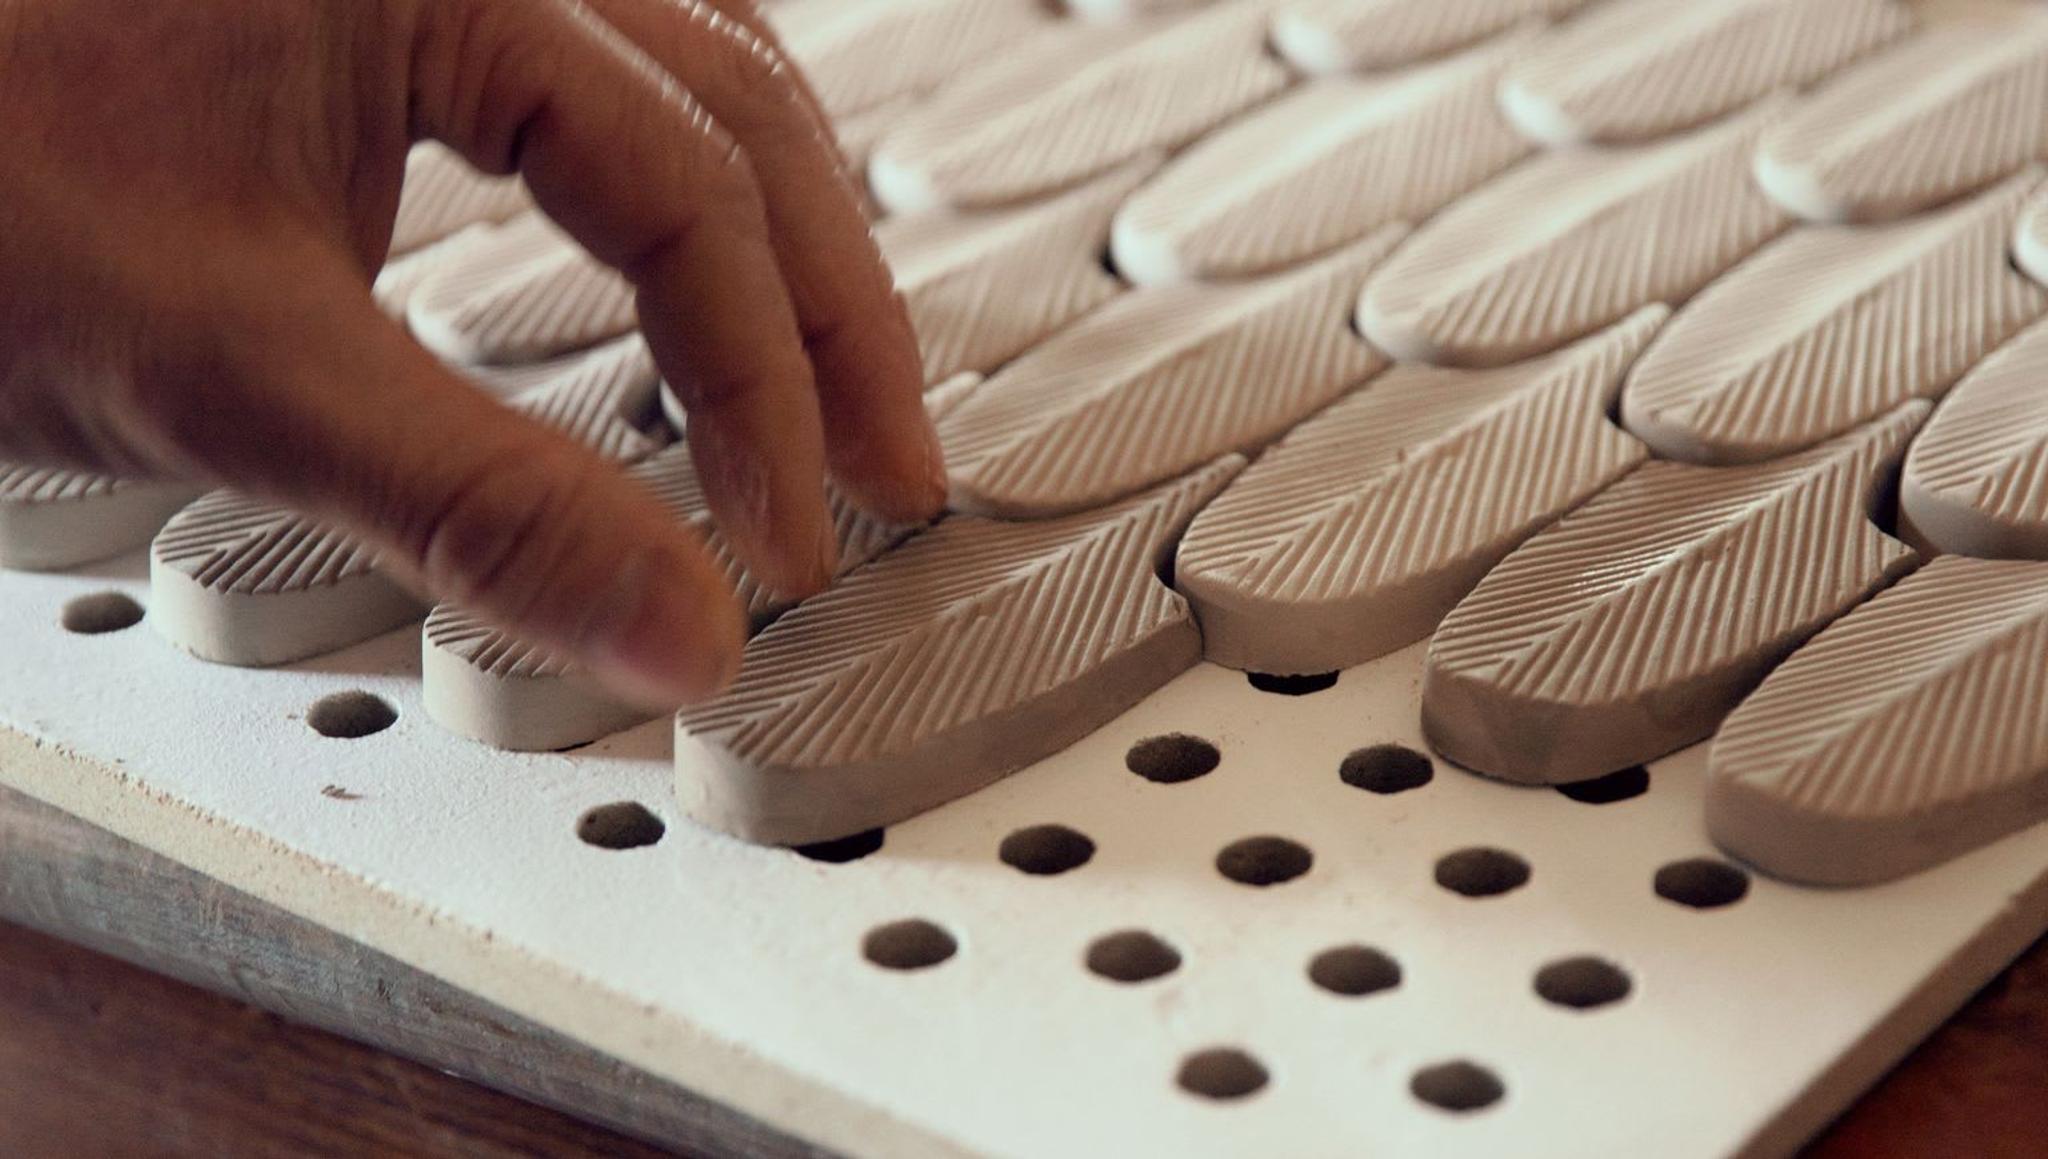 BottegaNove: reinventando la cerámica tradicional